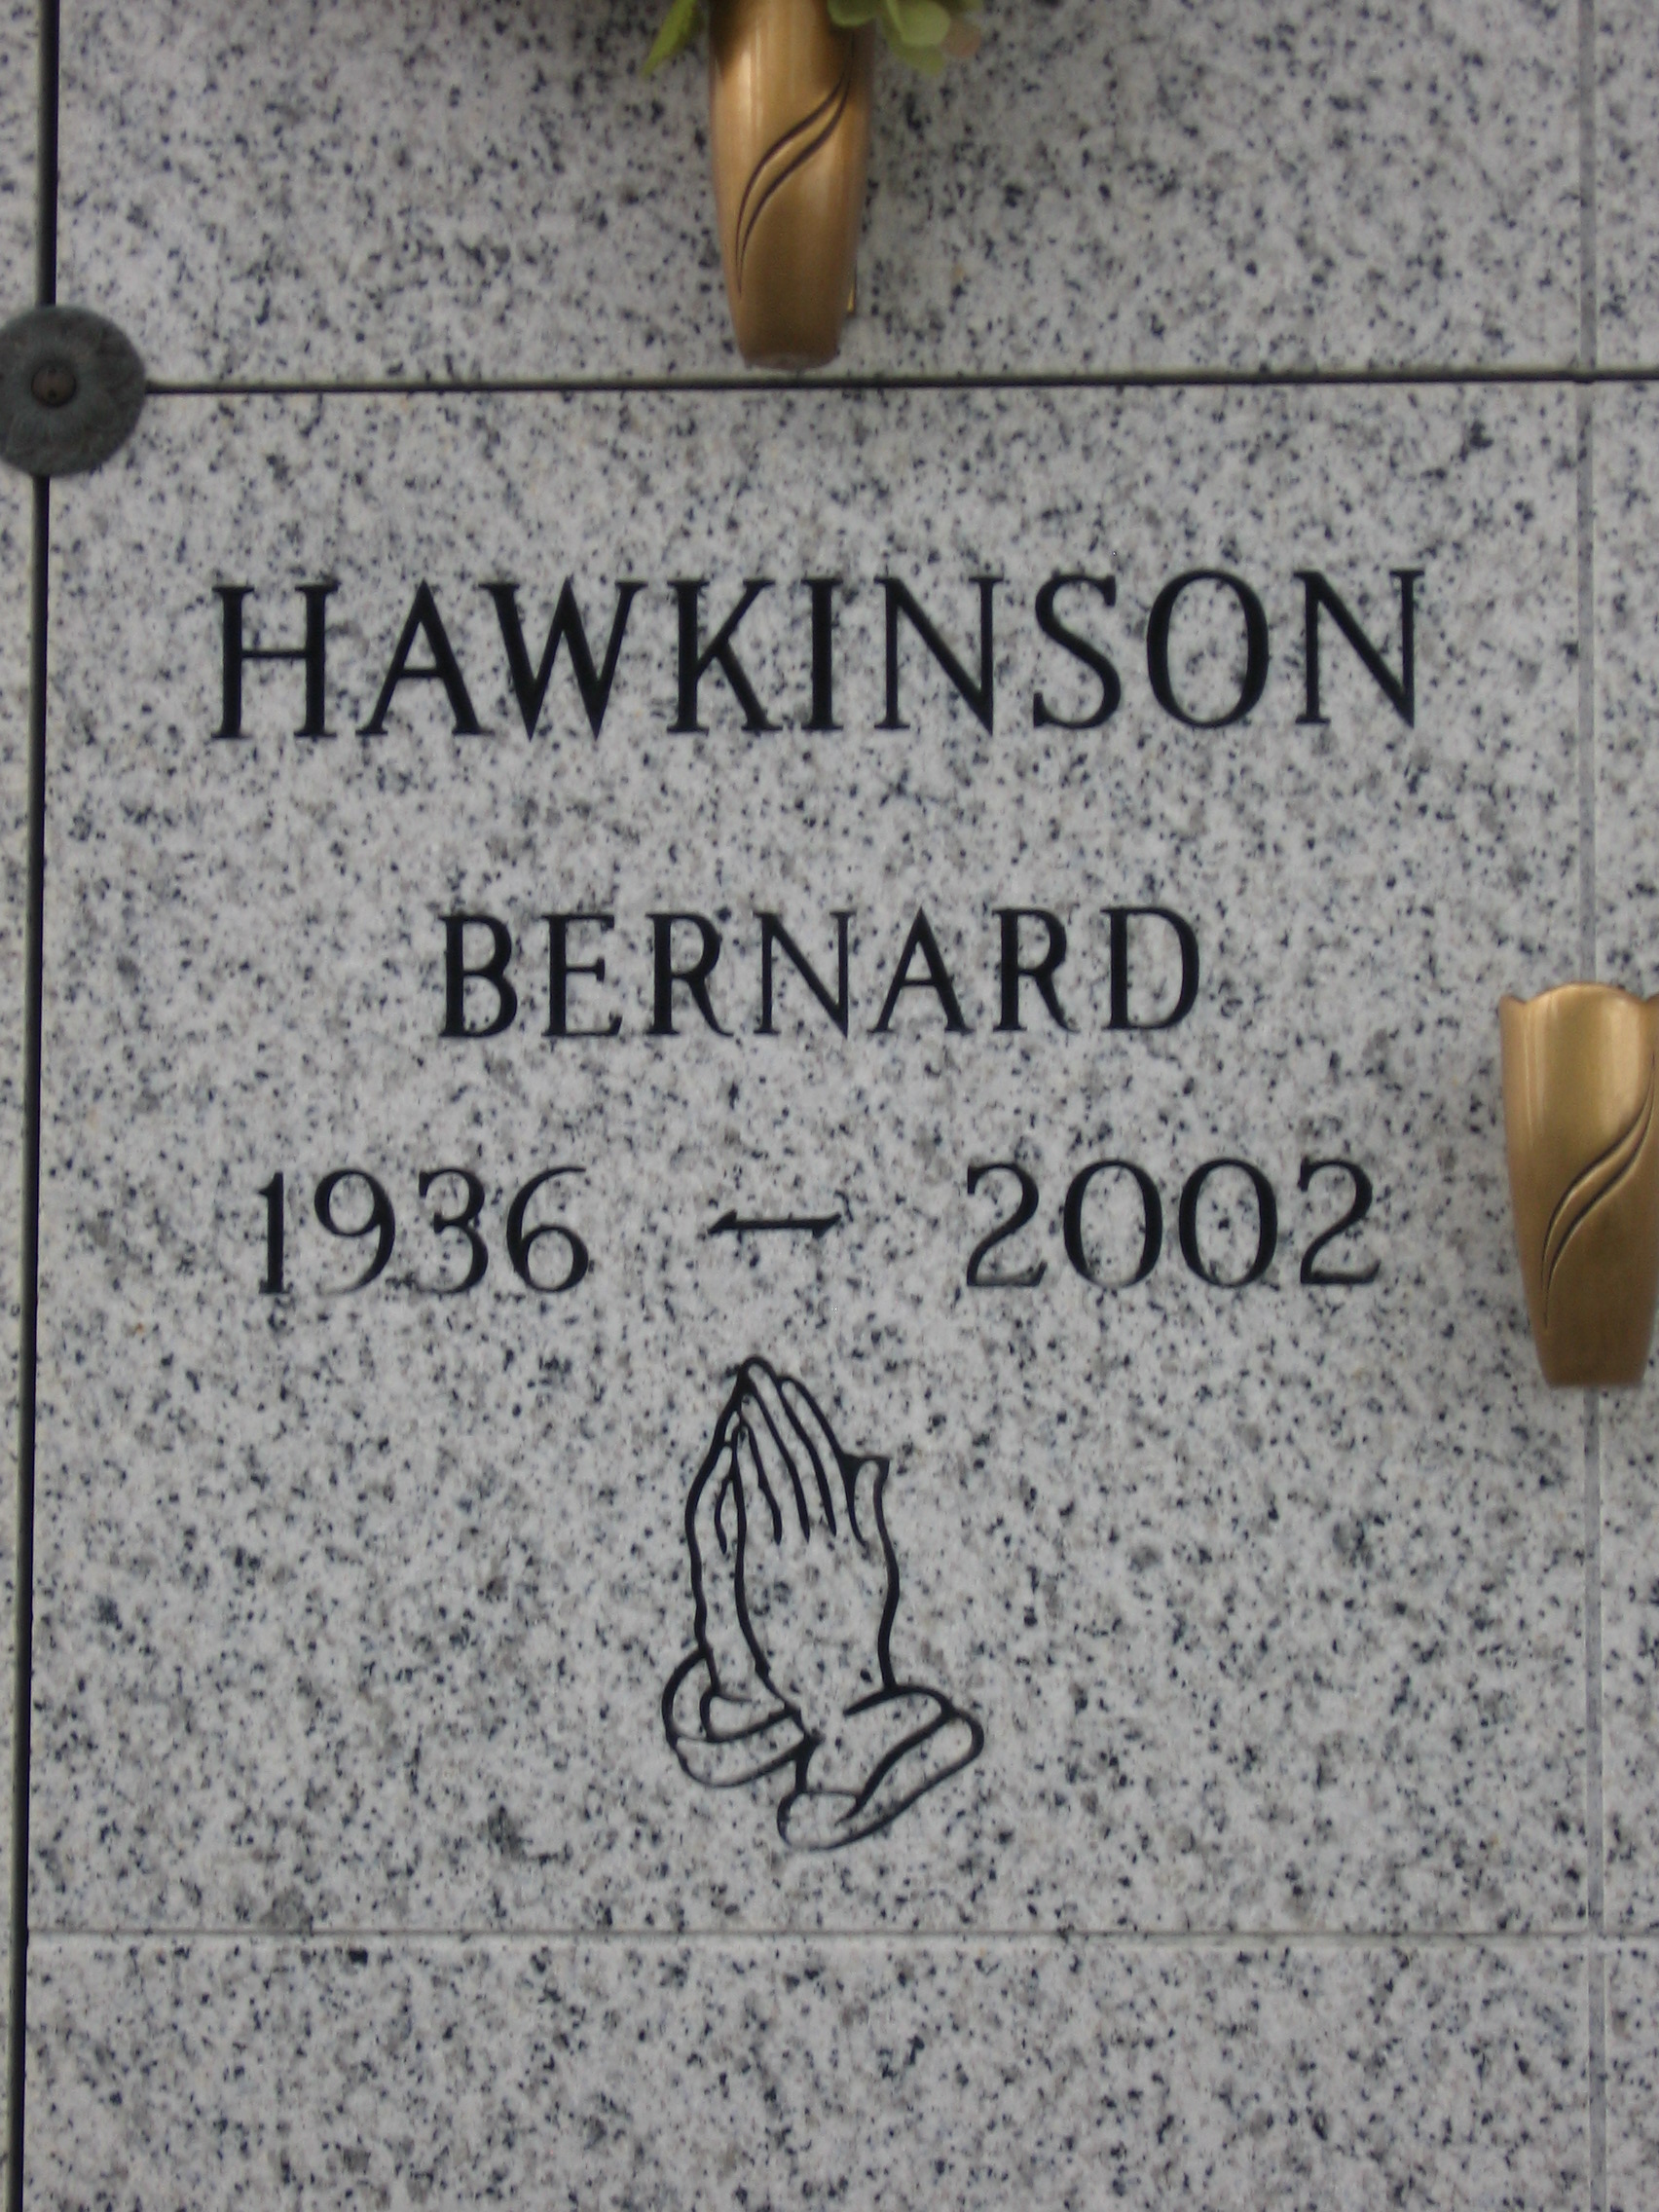 Bernard Hawkinson